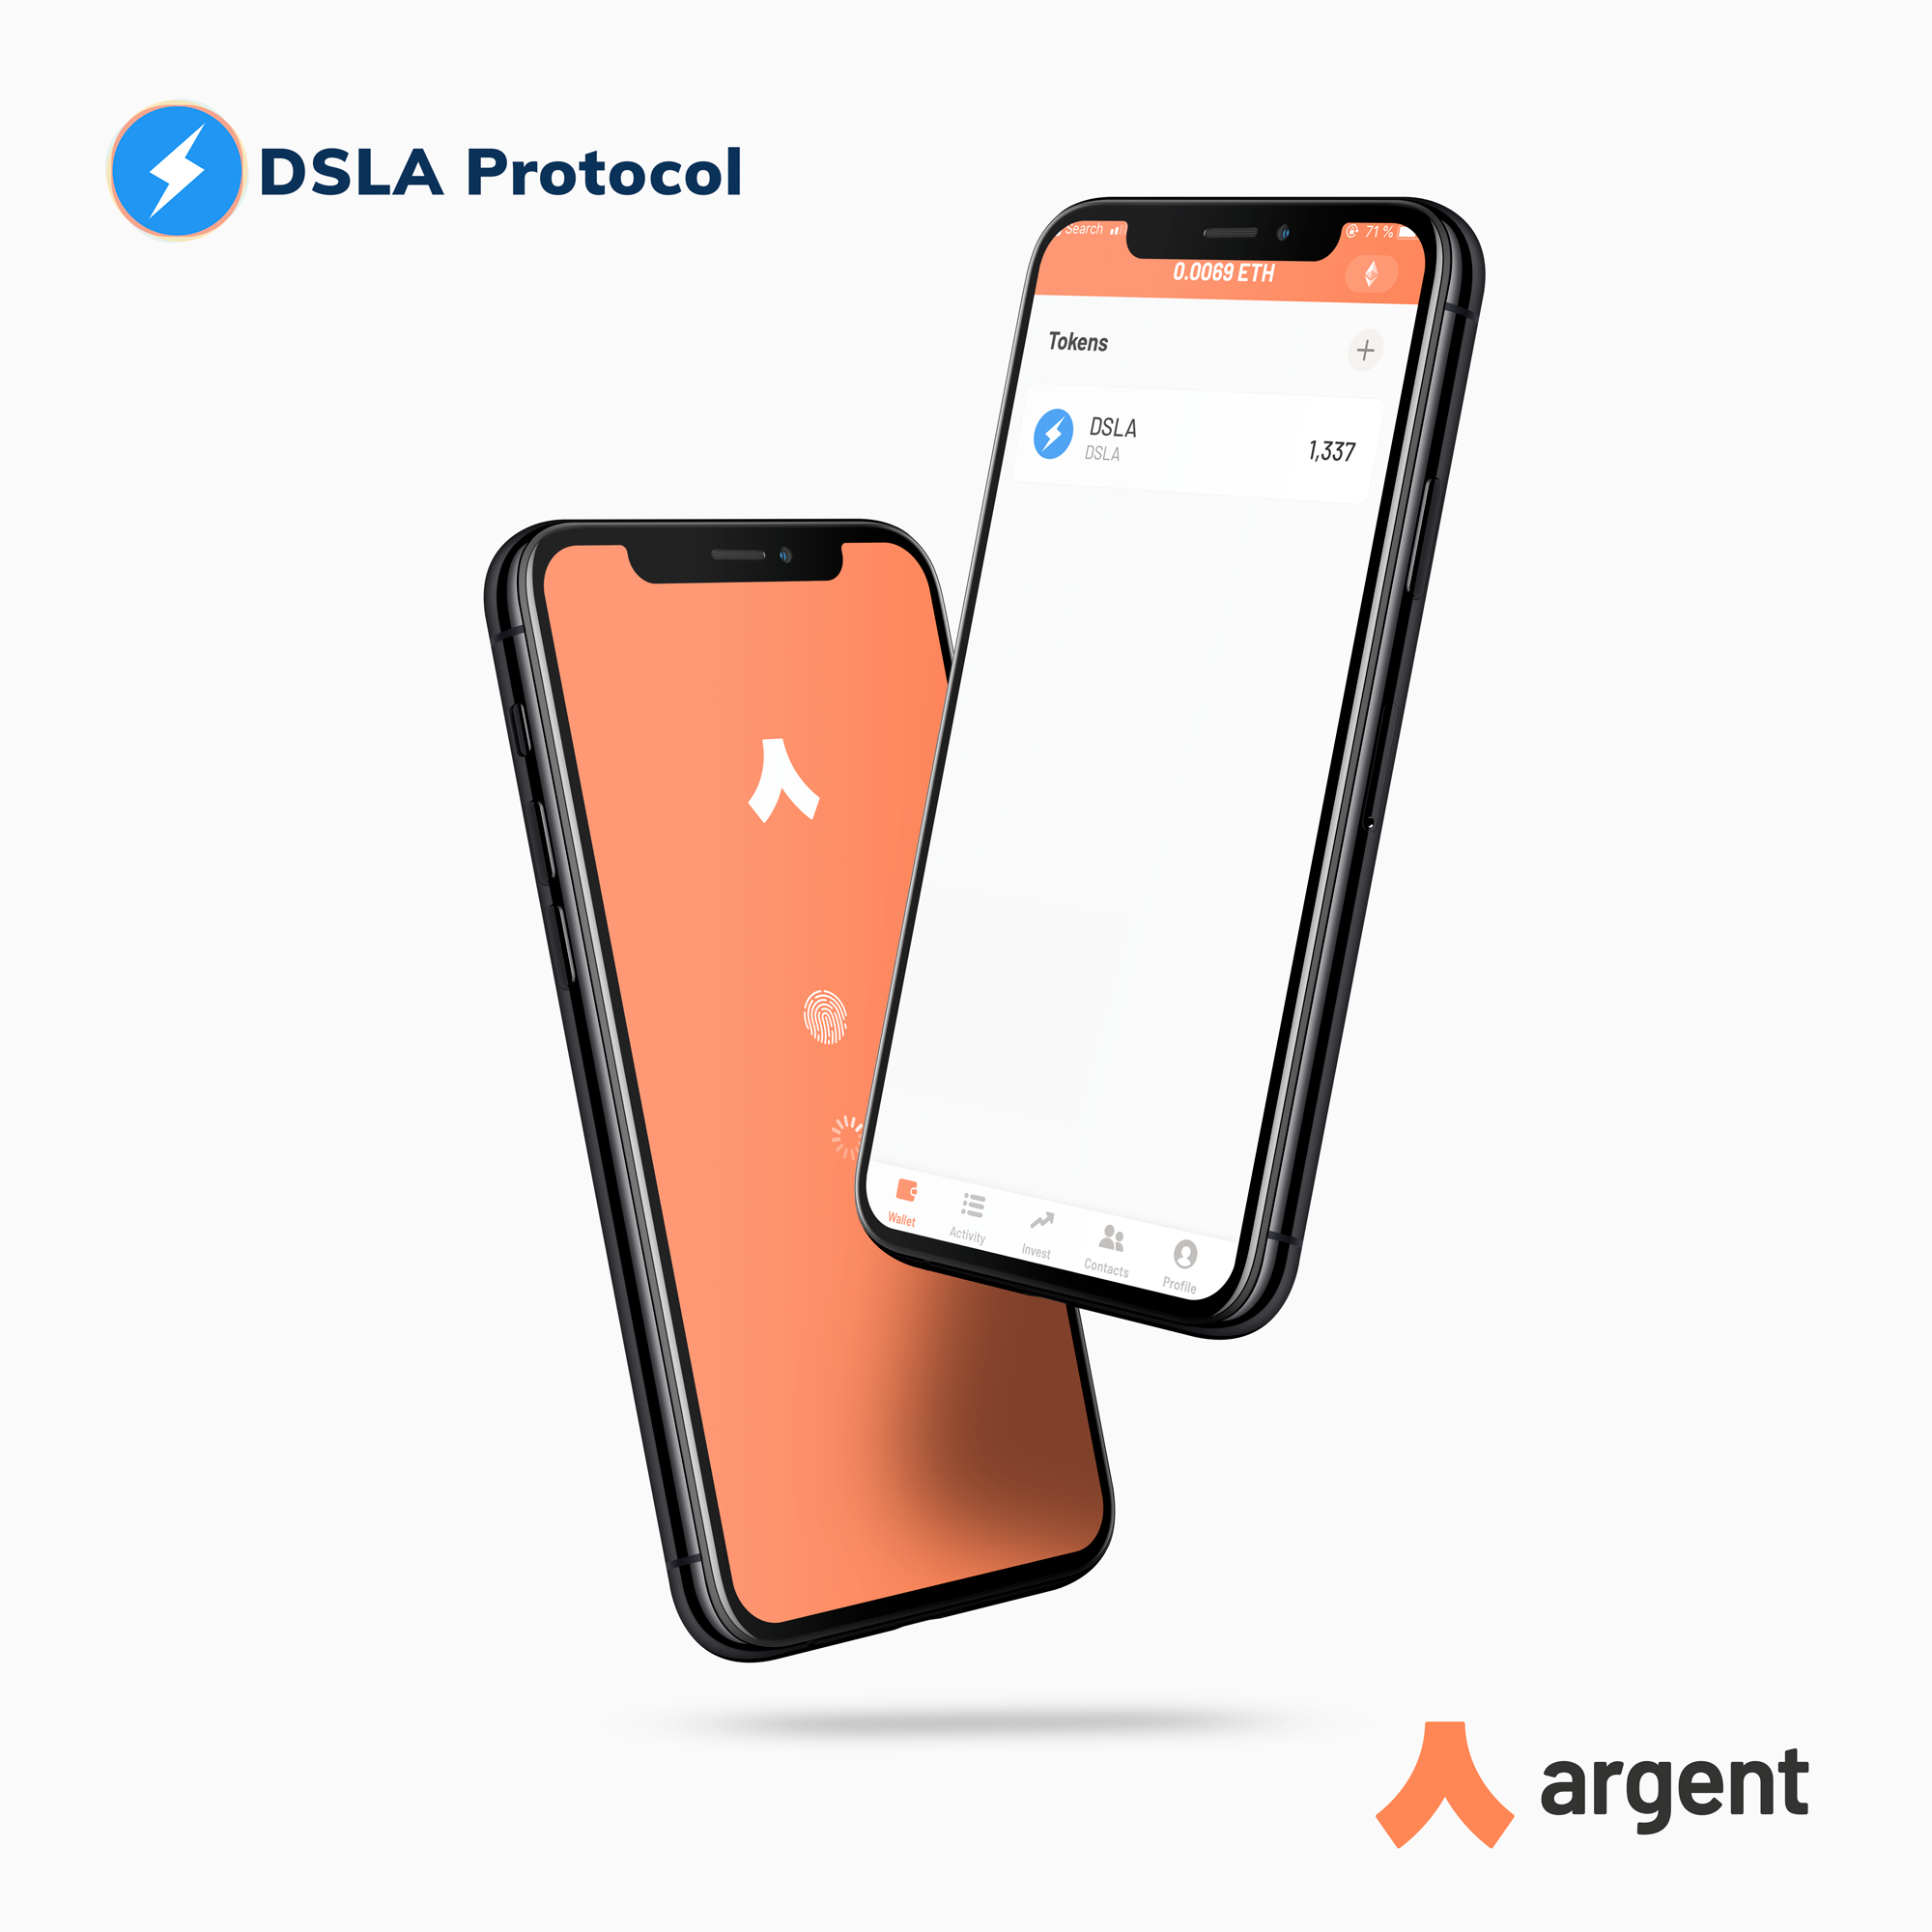 DSLA Token, now on Argent wallet